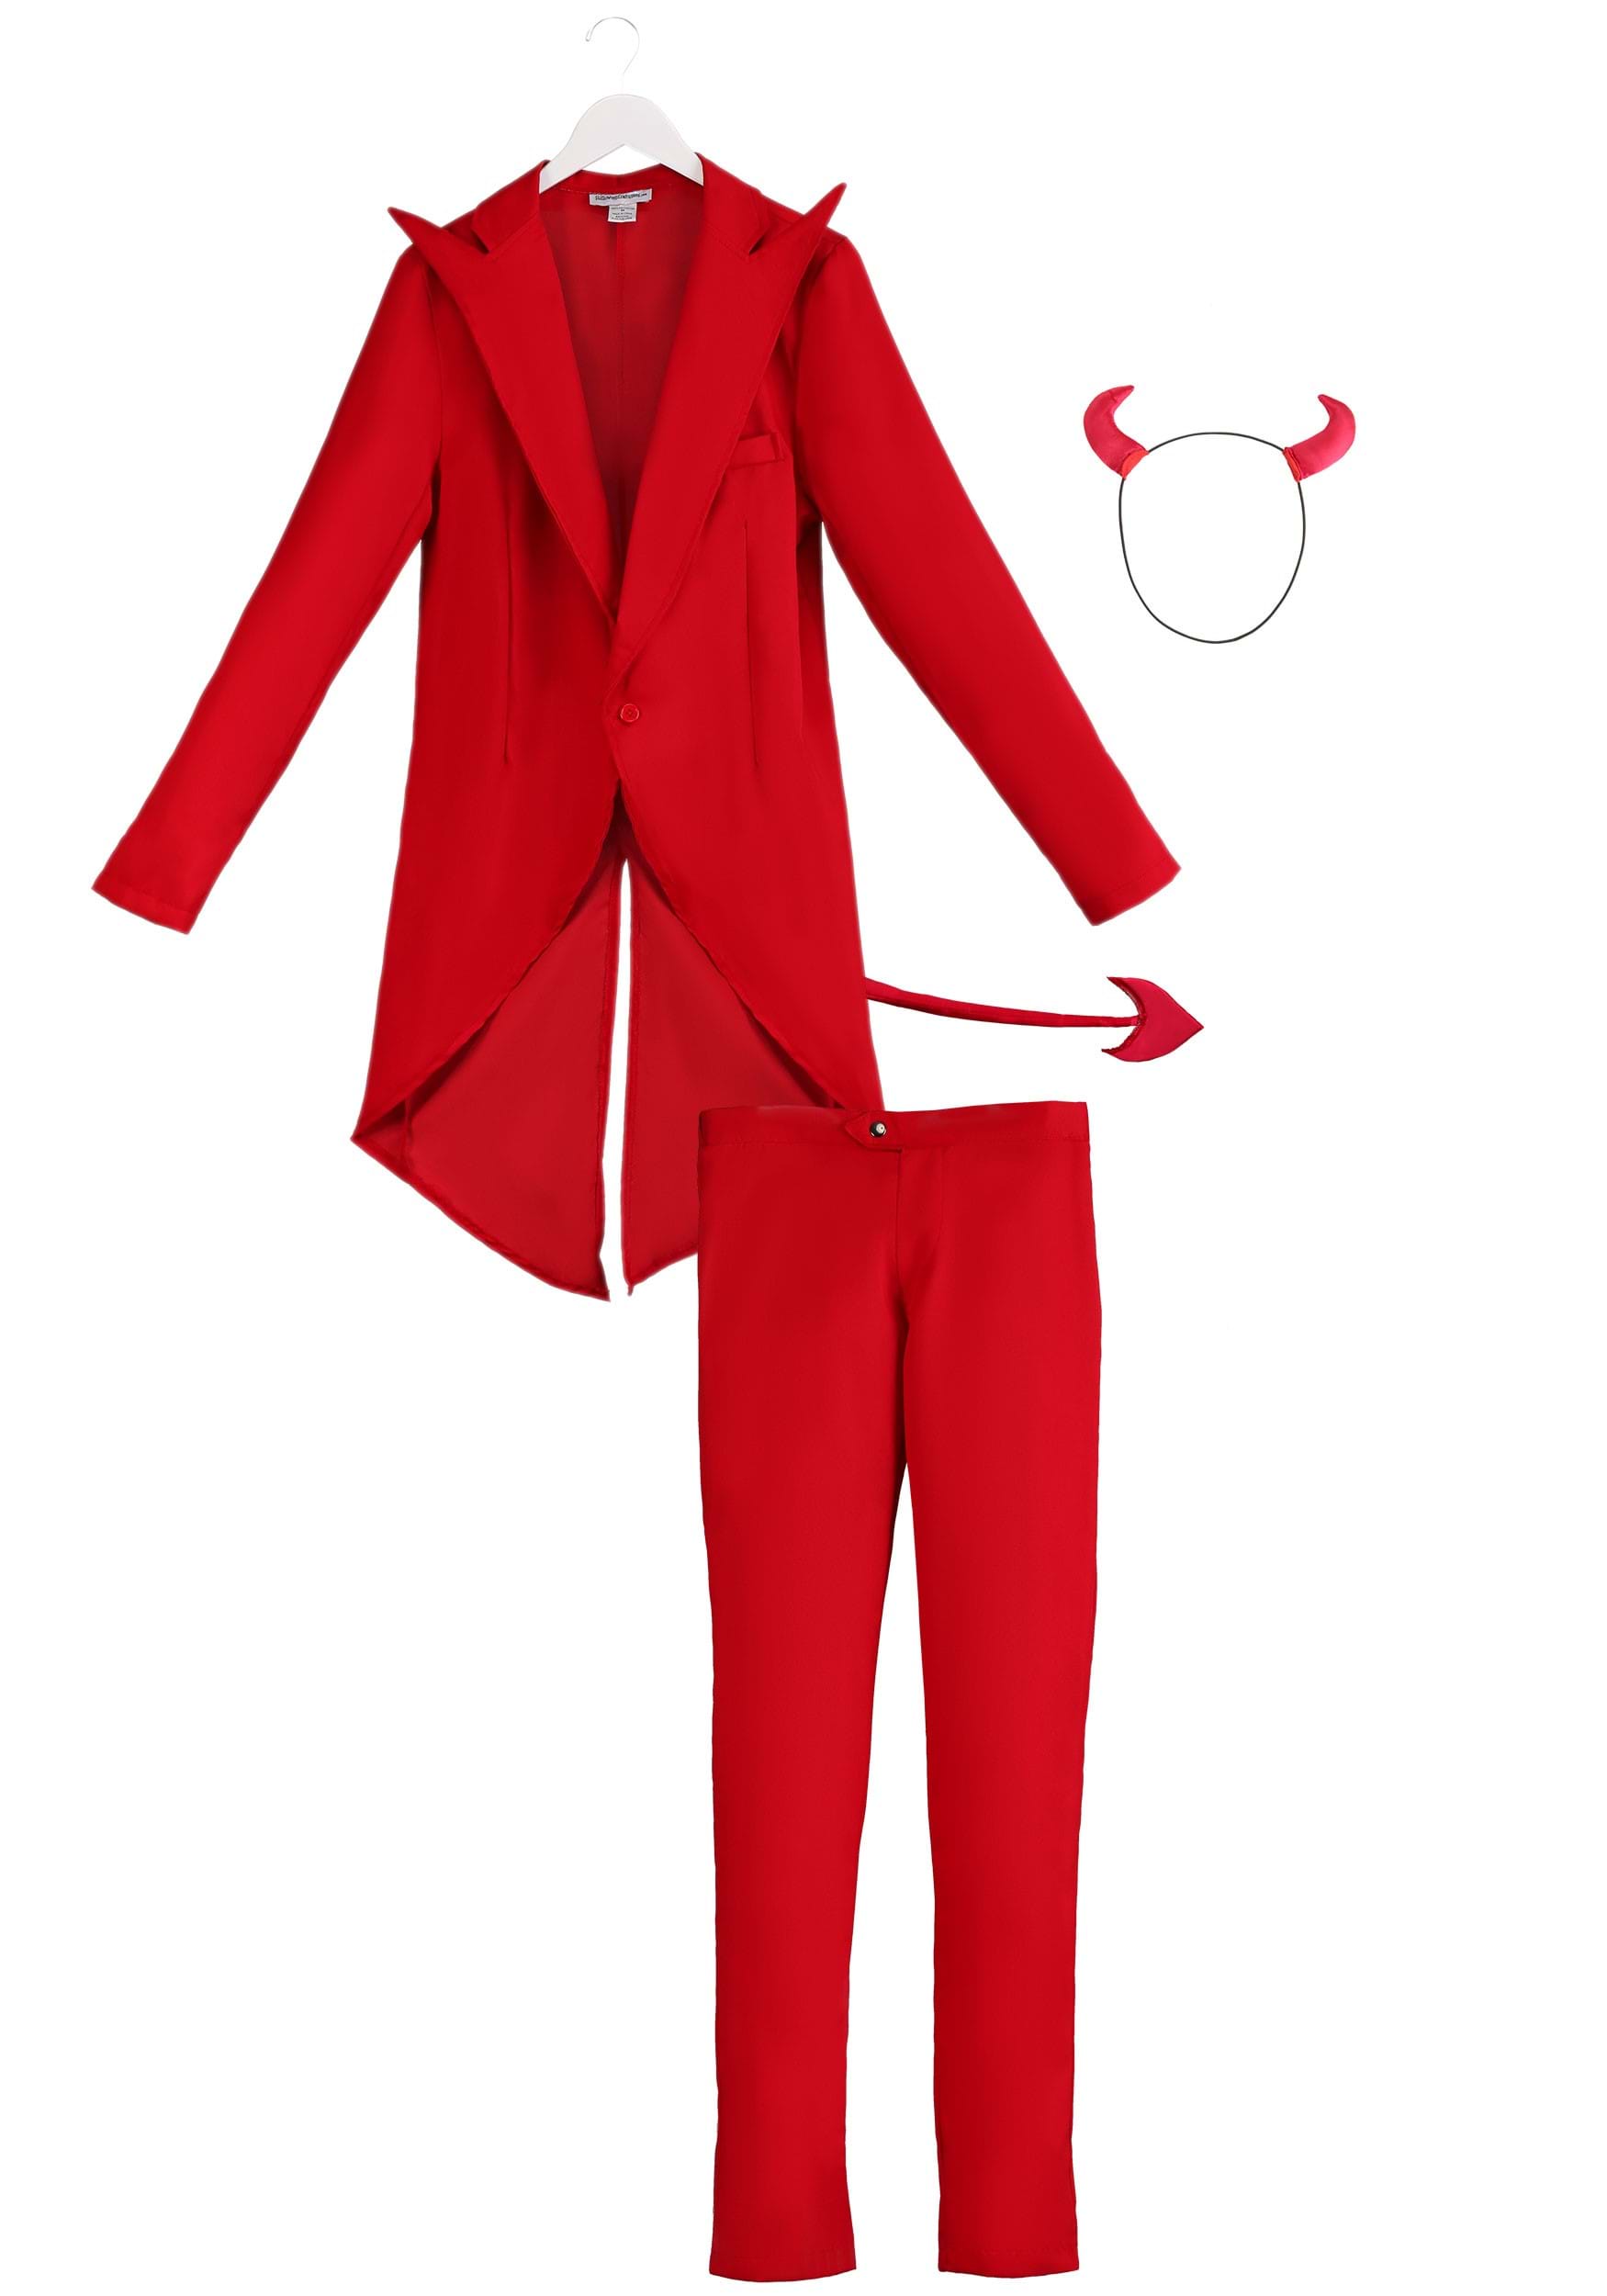 Red Suit Devil Fancy Dress Costume For Men